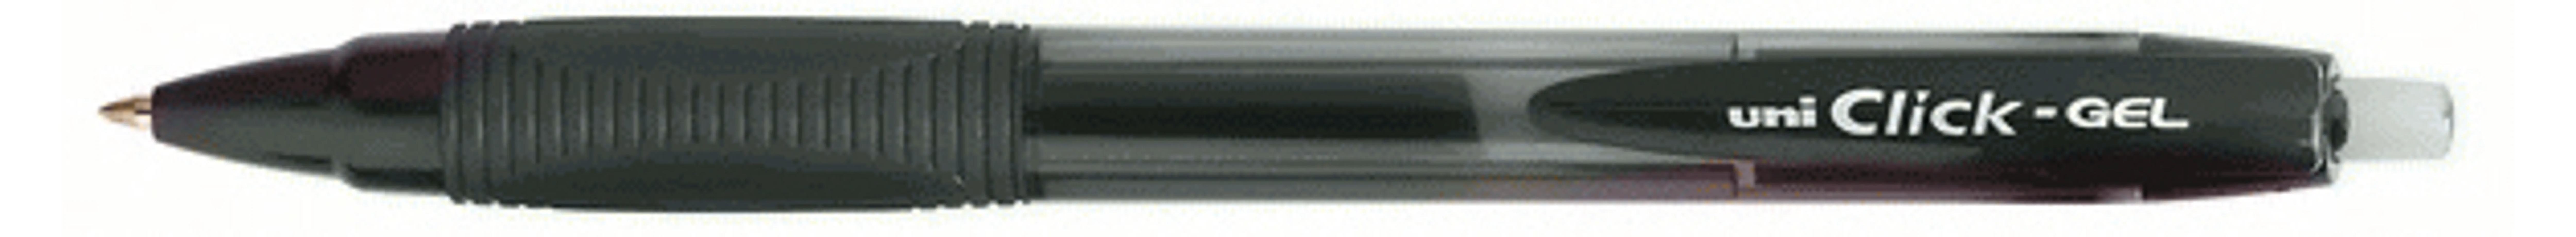 uni - xsg-r7 click gel rollerball pen